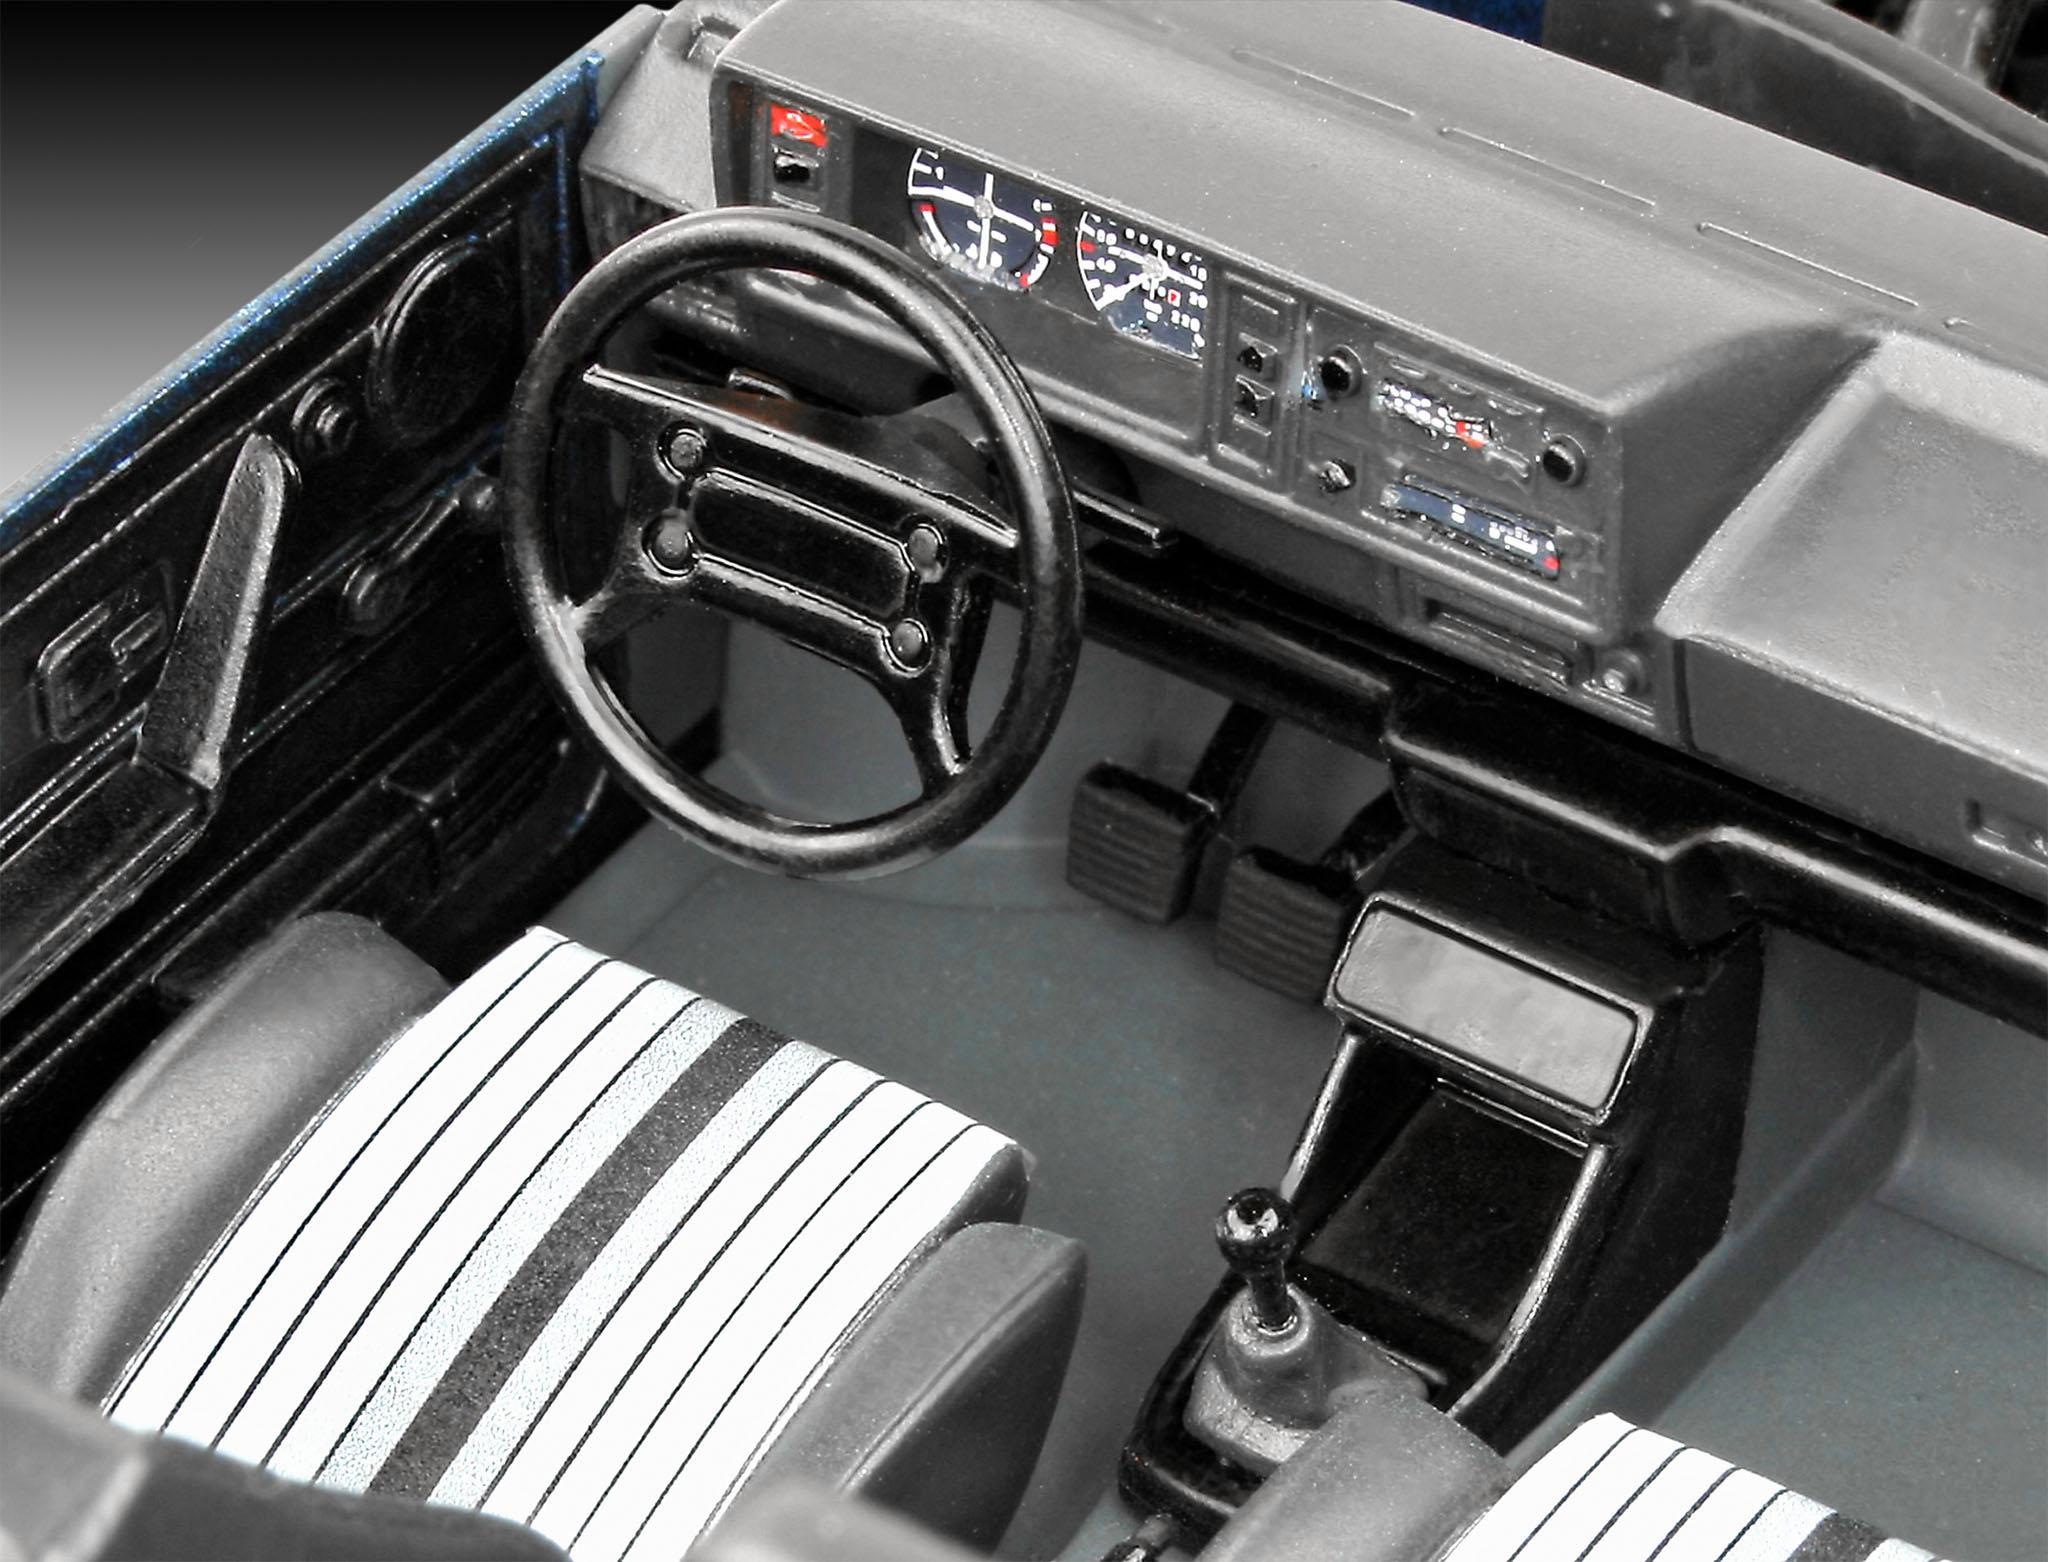 Revell® Modellbausatz »Model Set 35 Jahre VW Golf GTI Pirelli«, (Set), 1:24, Made in Europe